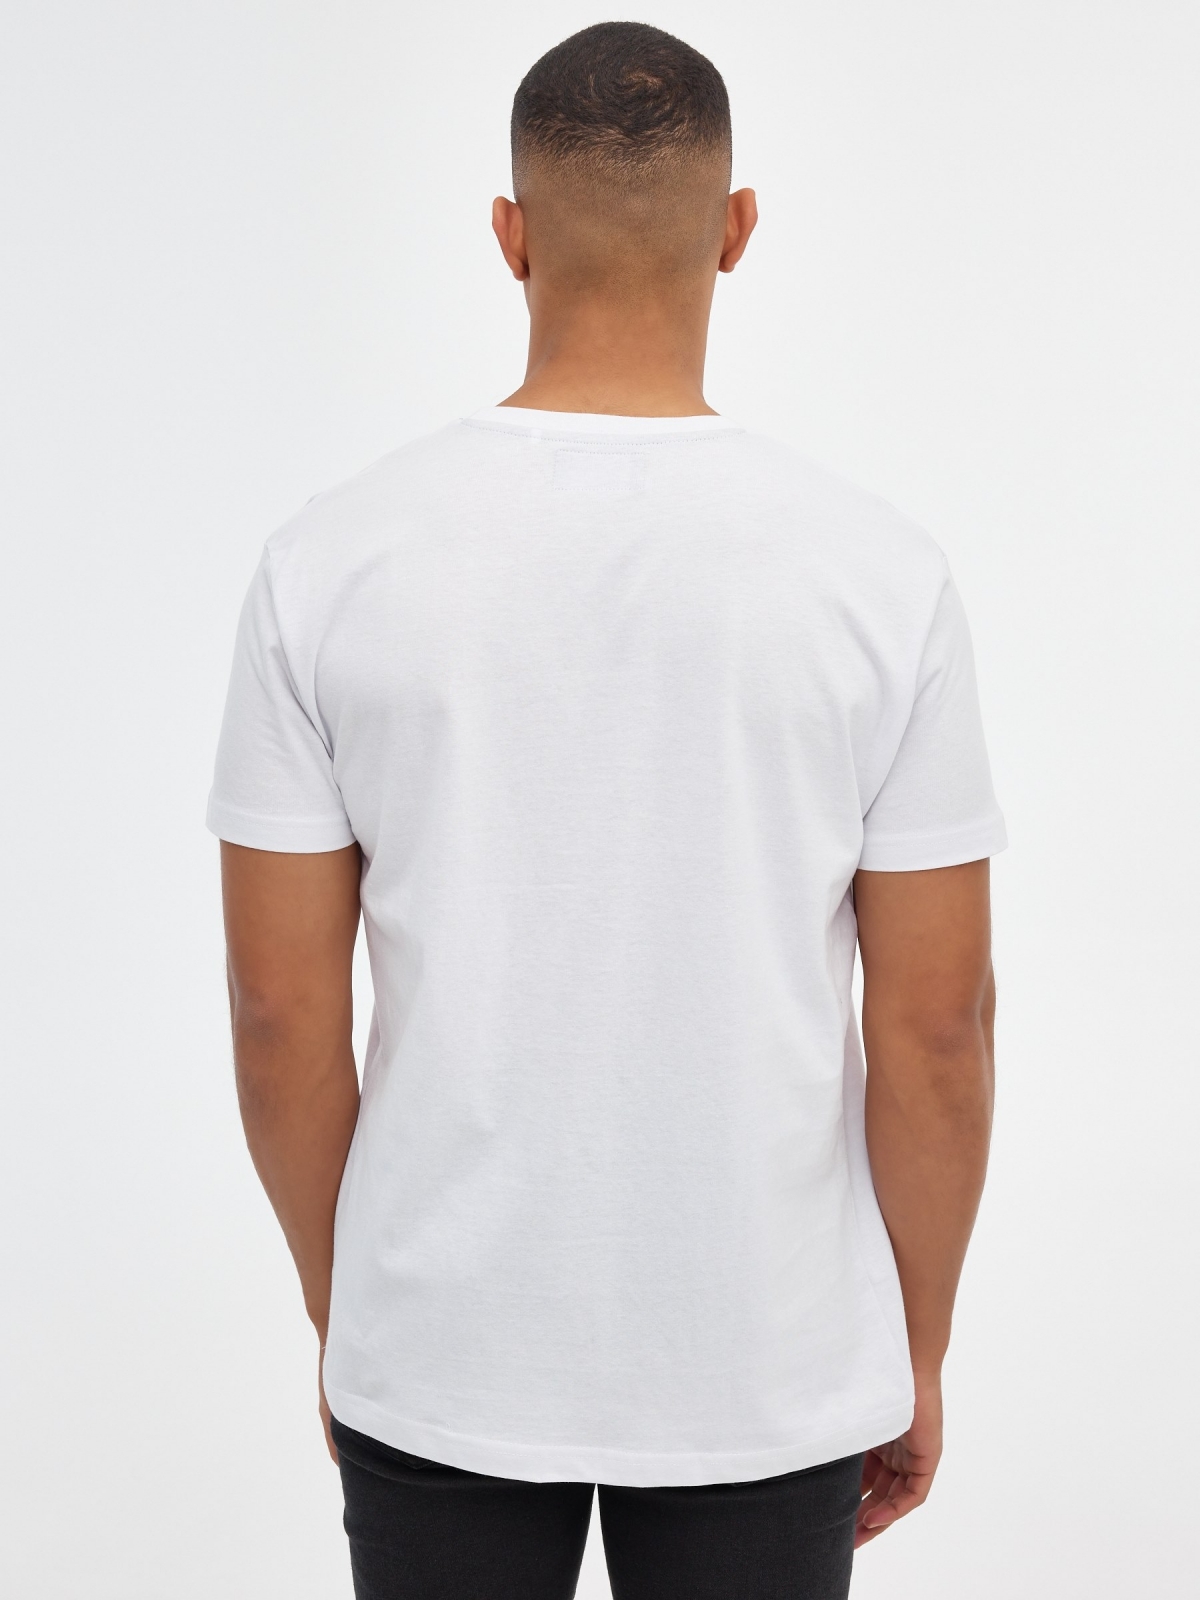 Camiseta estampado texto blanco vista media trasera